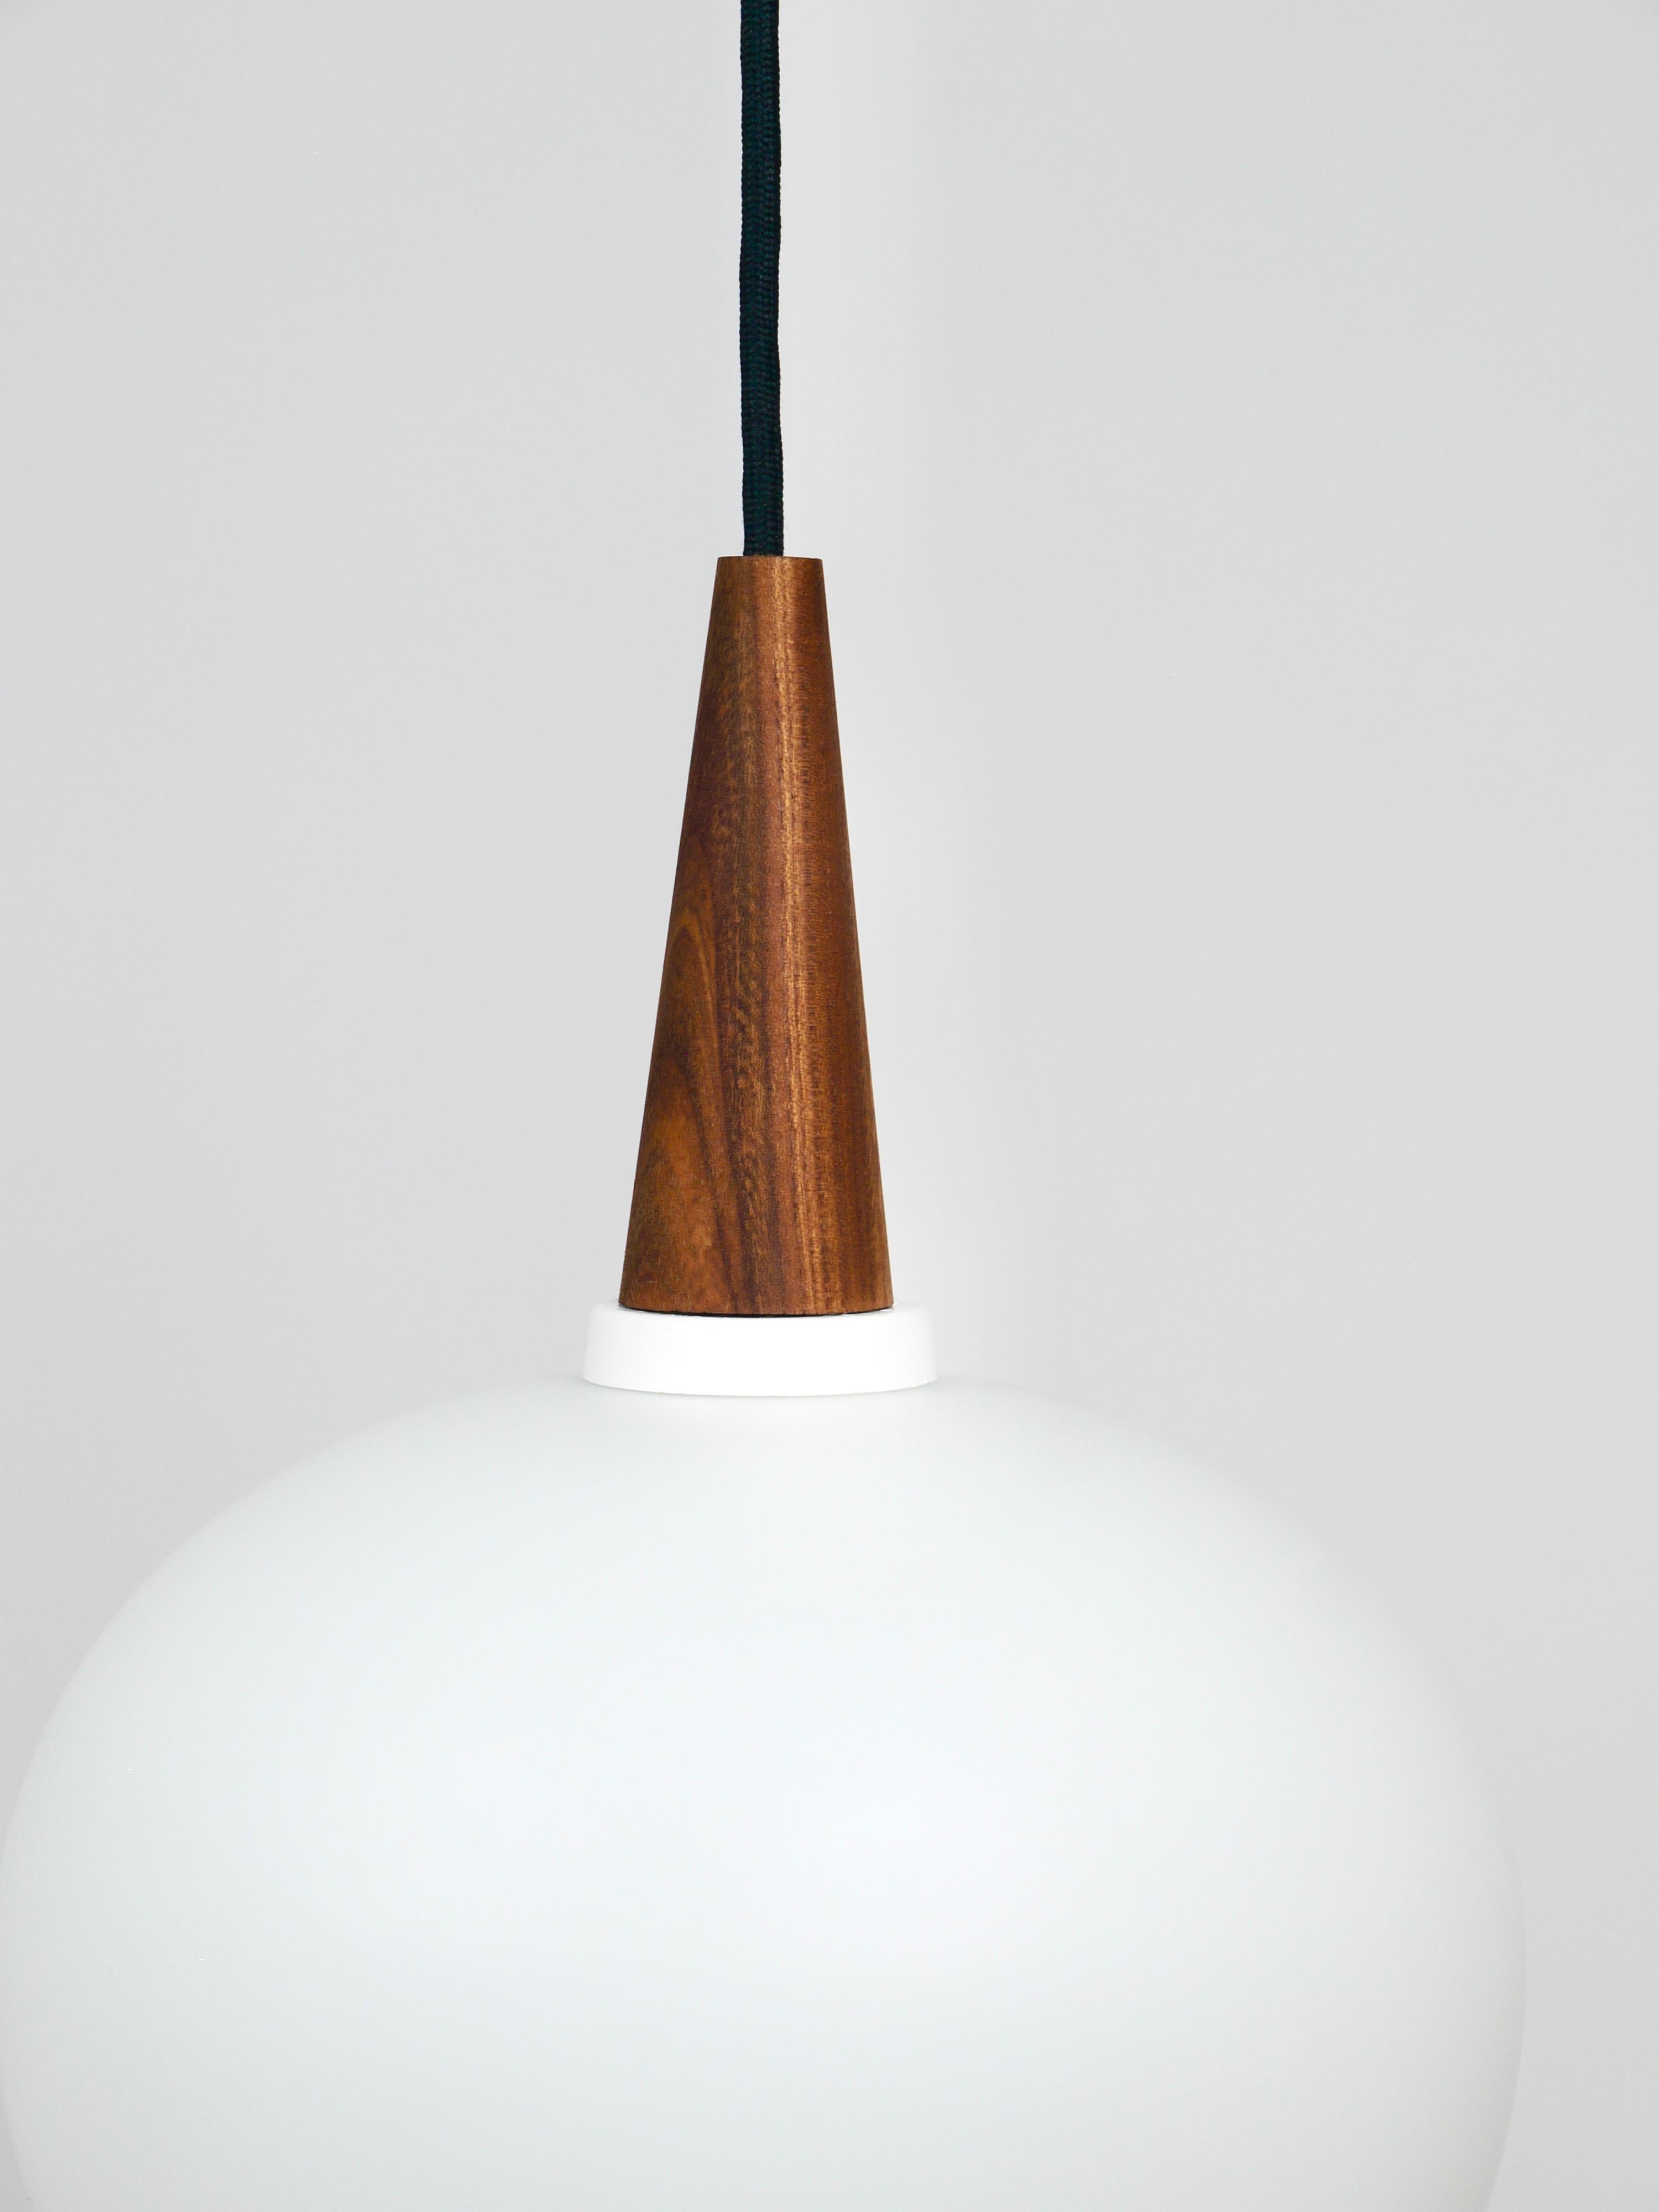 Louis Kalff Teak & Opaline Pendant Suspension Lamp, Philips, Netherlands For Sale 2